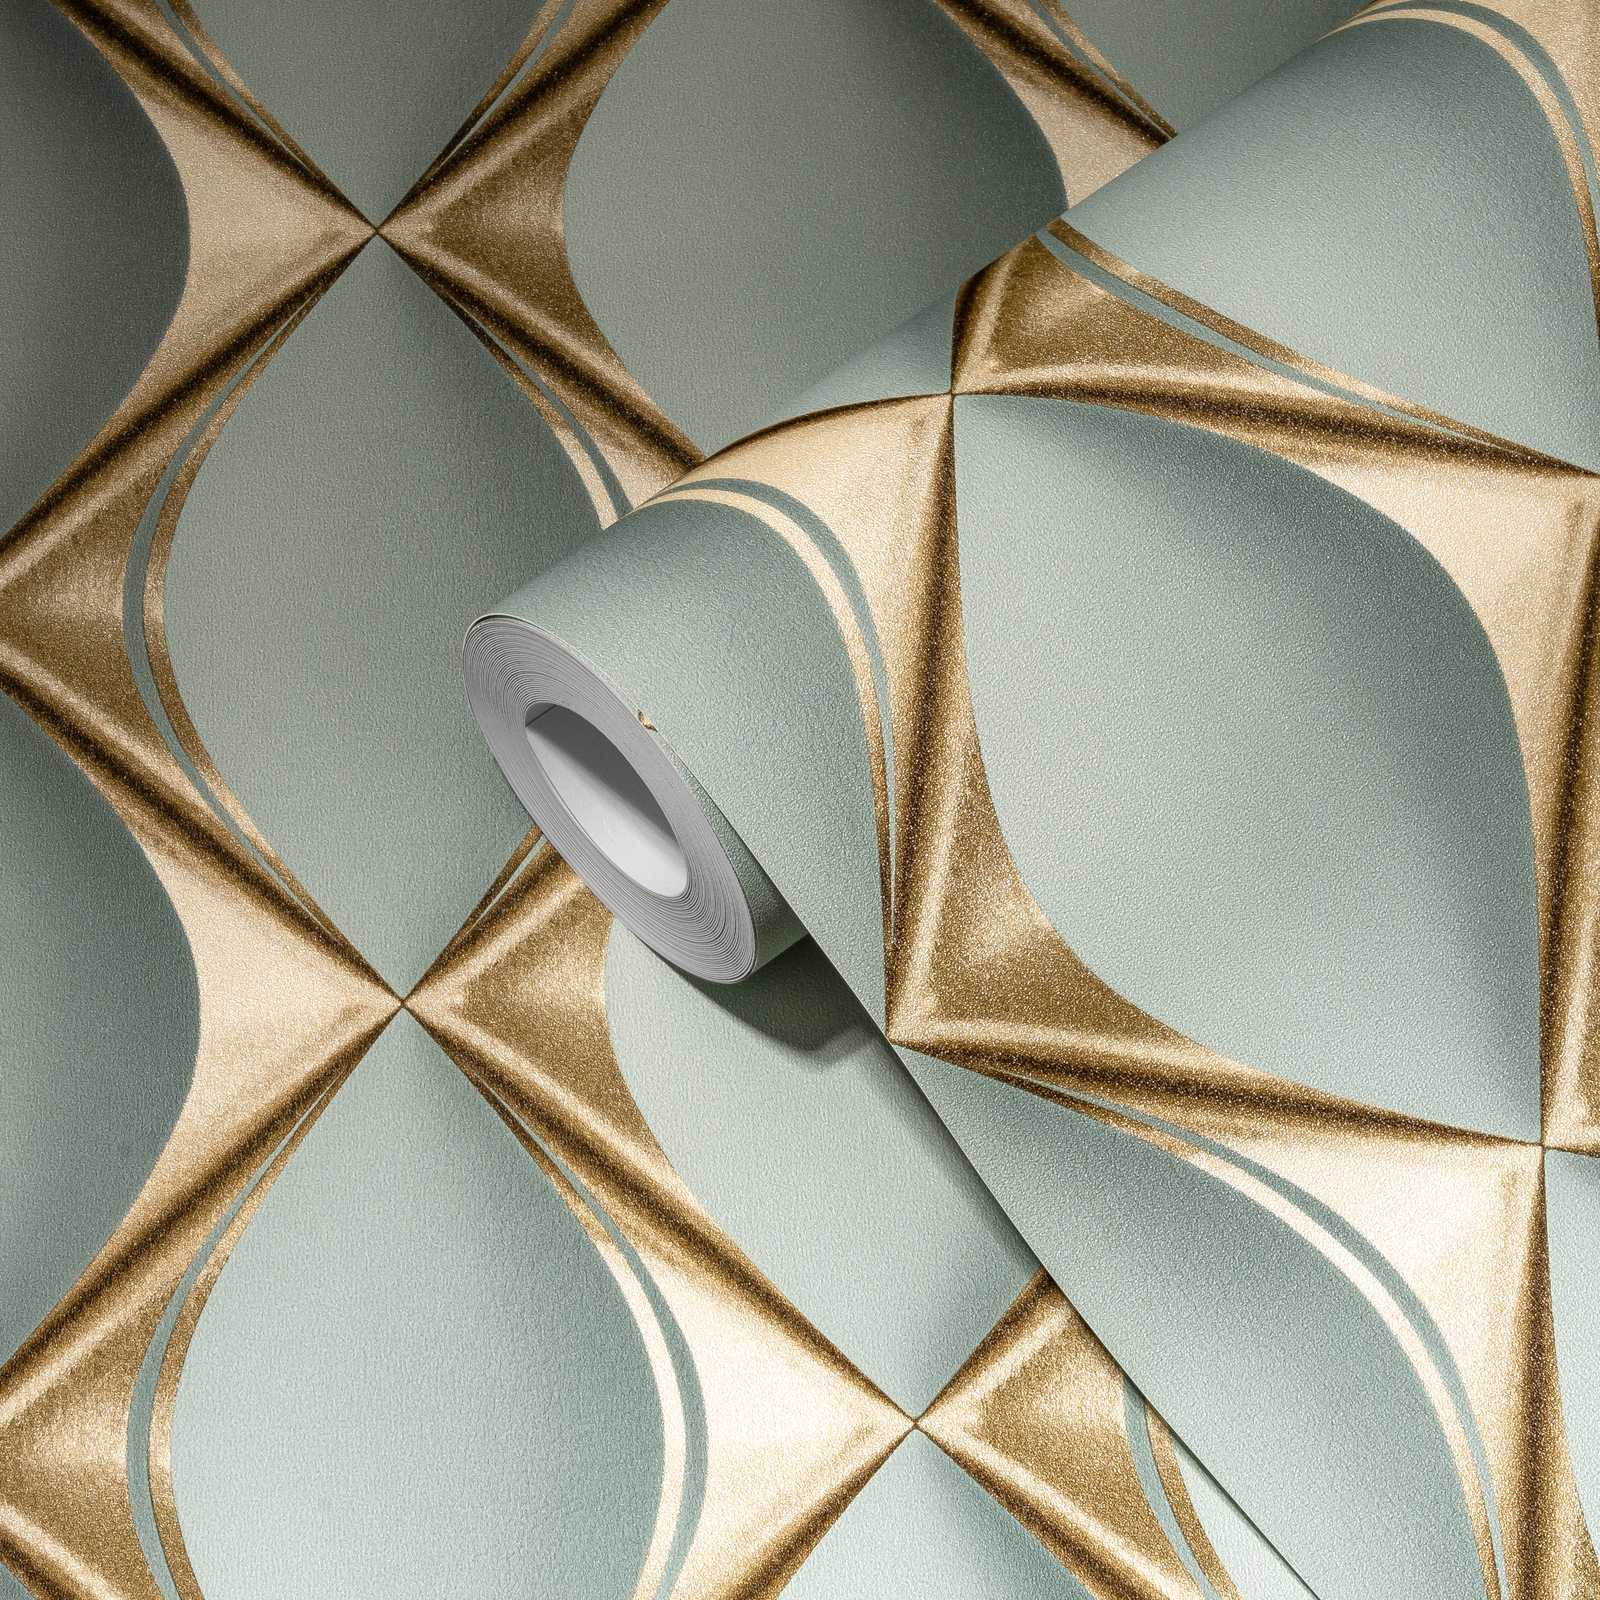             Tapete 3D Design mit Metallic Facetten Muster – Grün, Metallic
        